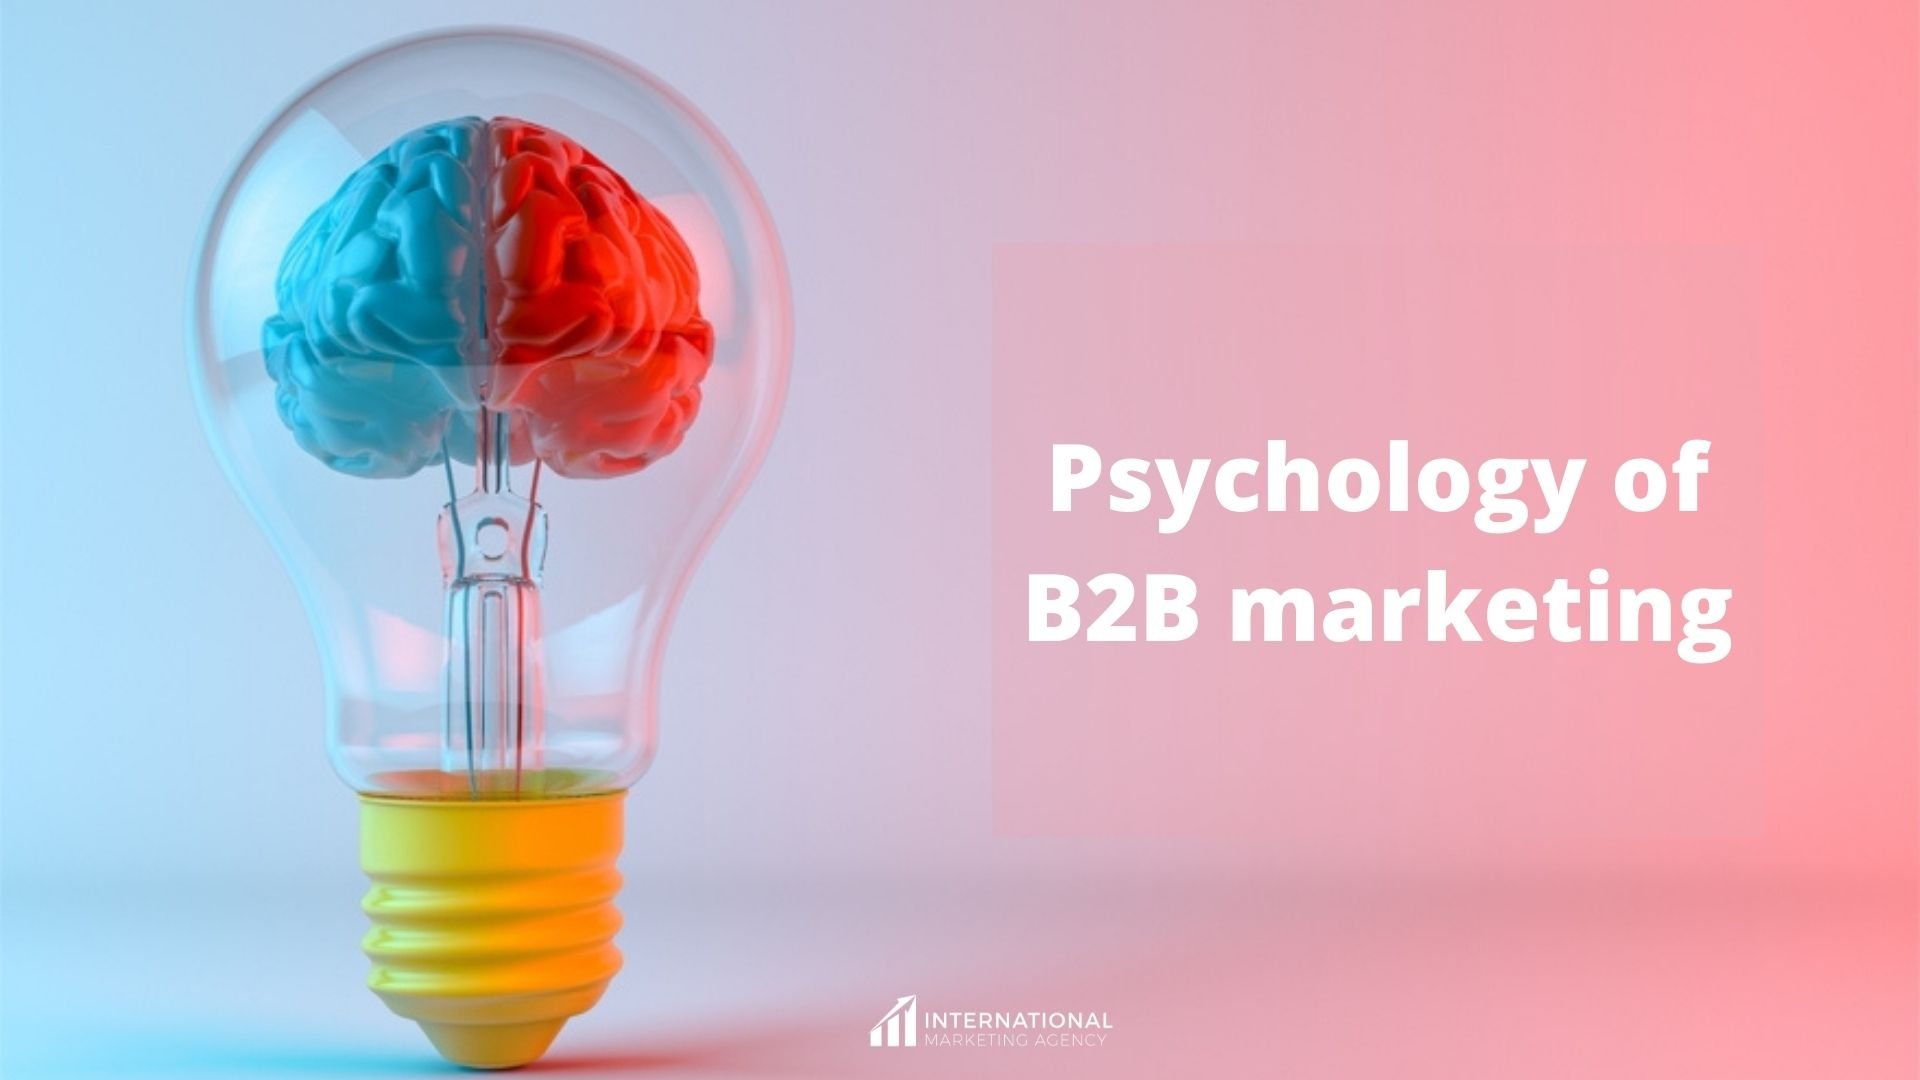 Psychology of B2B marketing